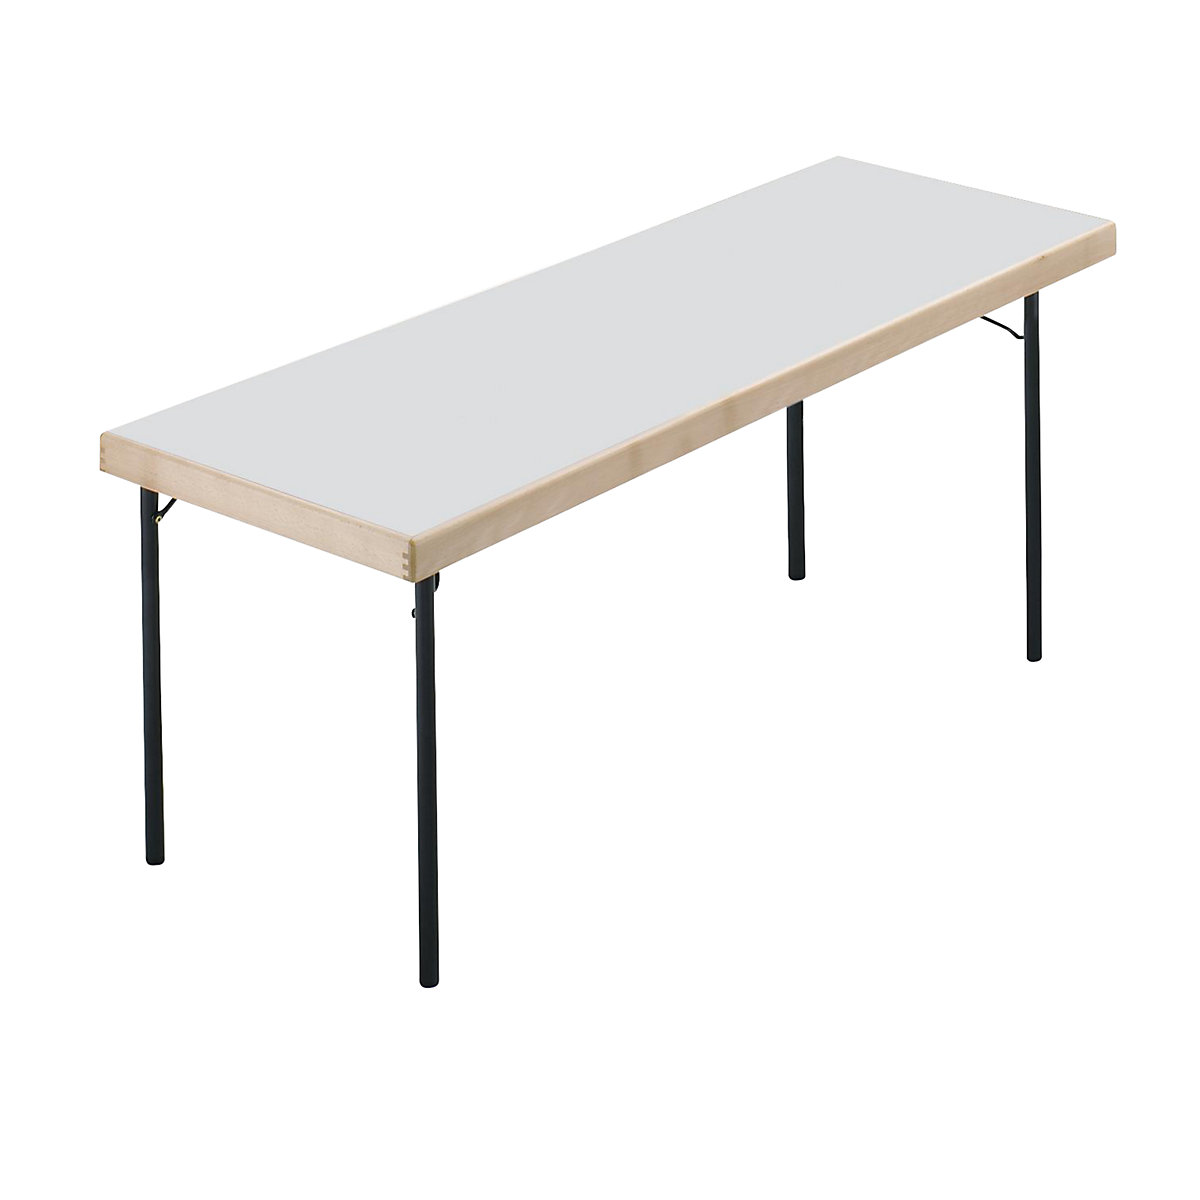 Sklápací stôl, podstavec so 4 nohami, 1700 x 700 mm, podstavec antracitová, doska svetlošedá-15